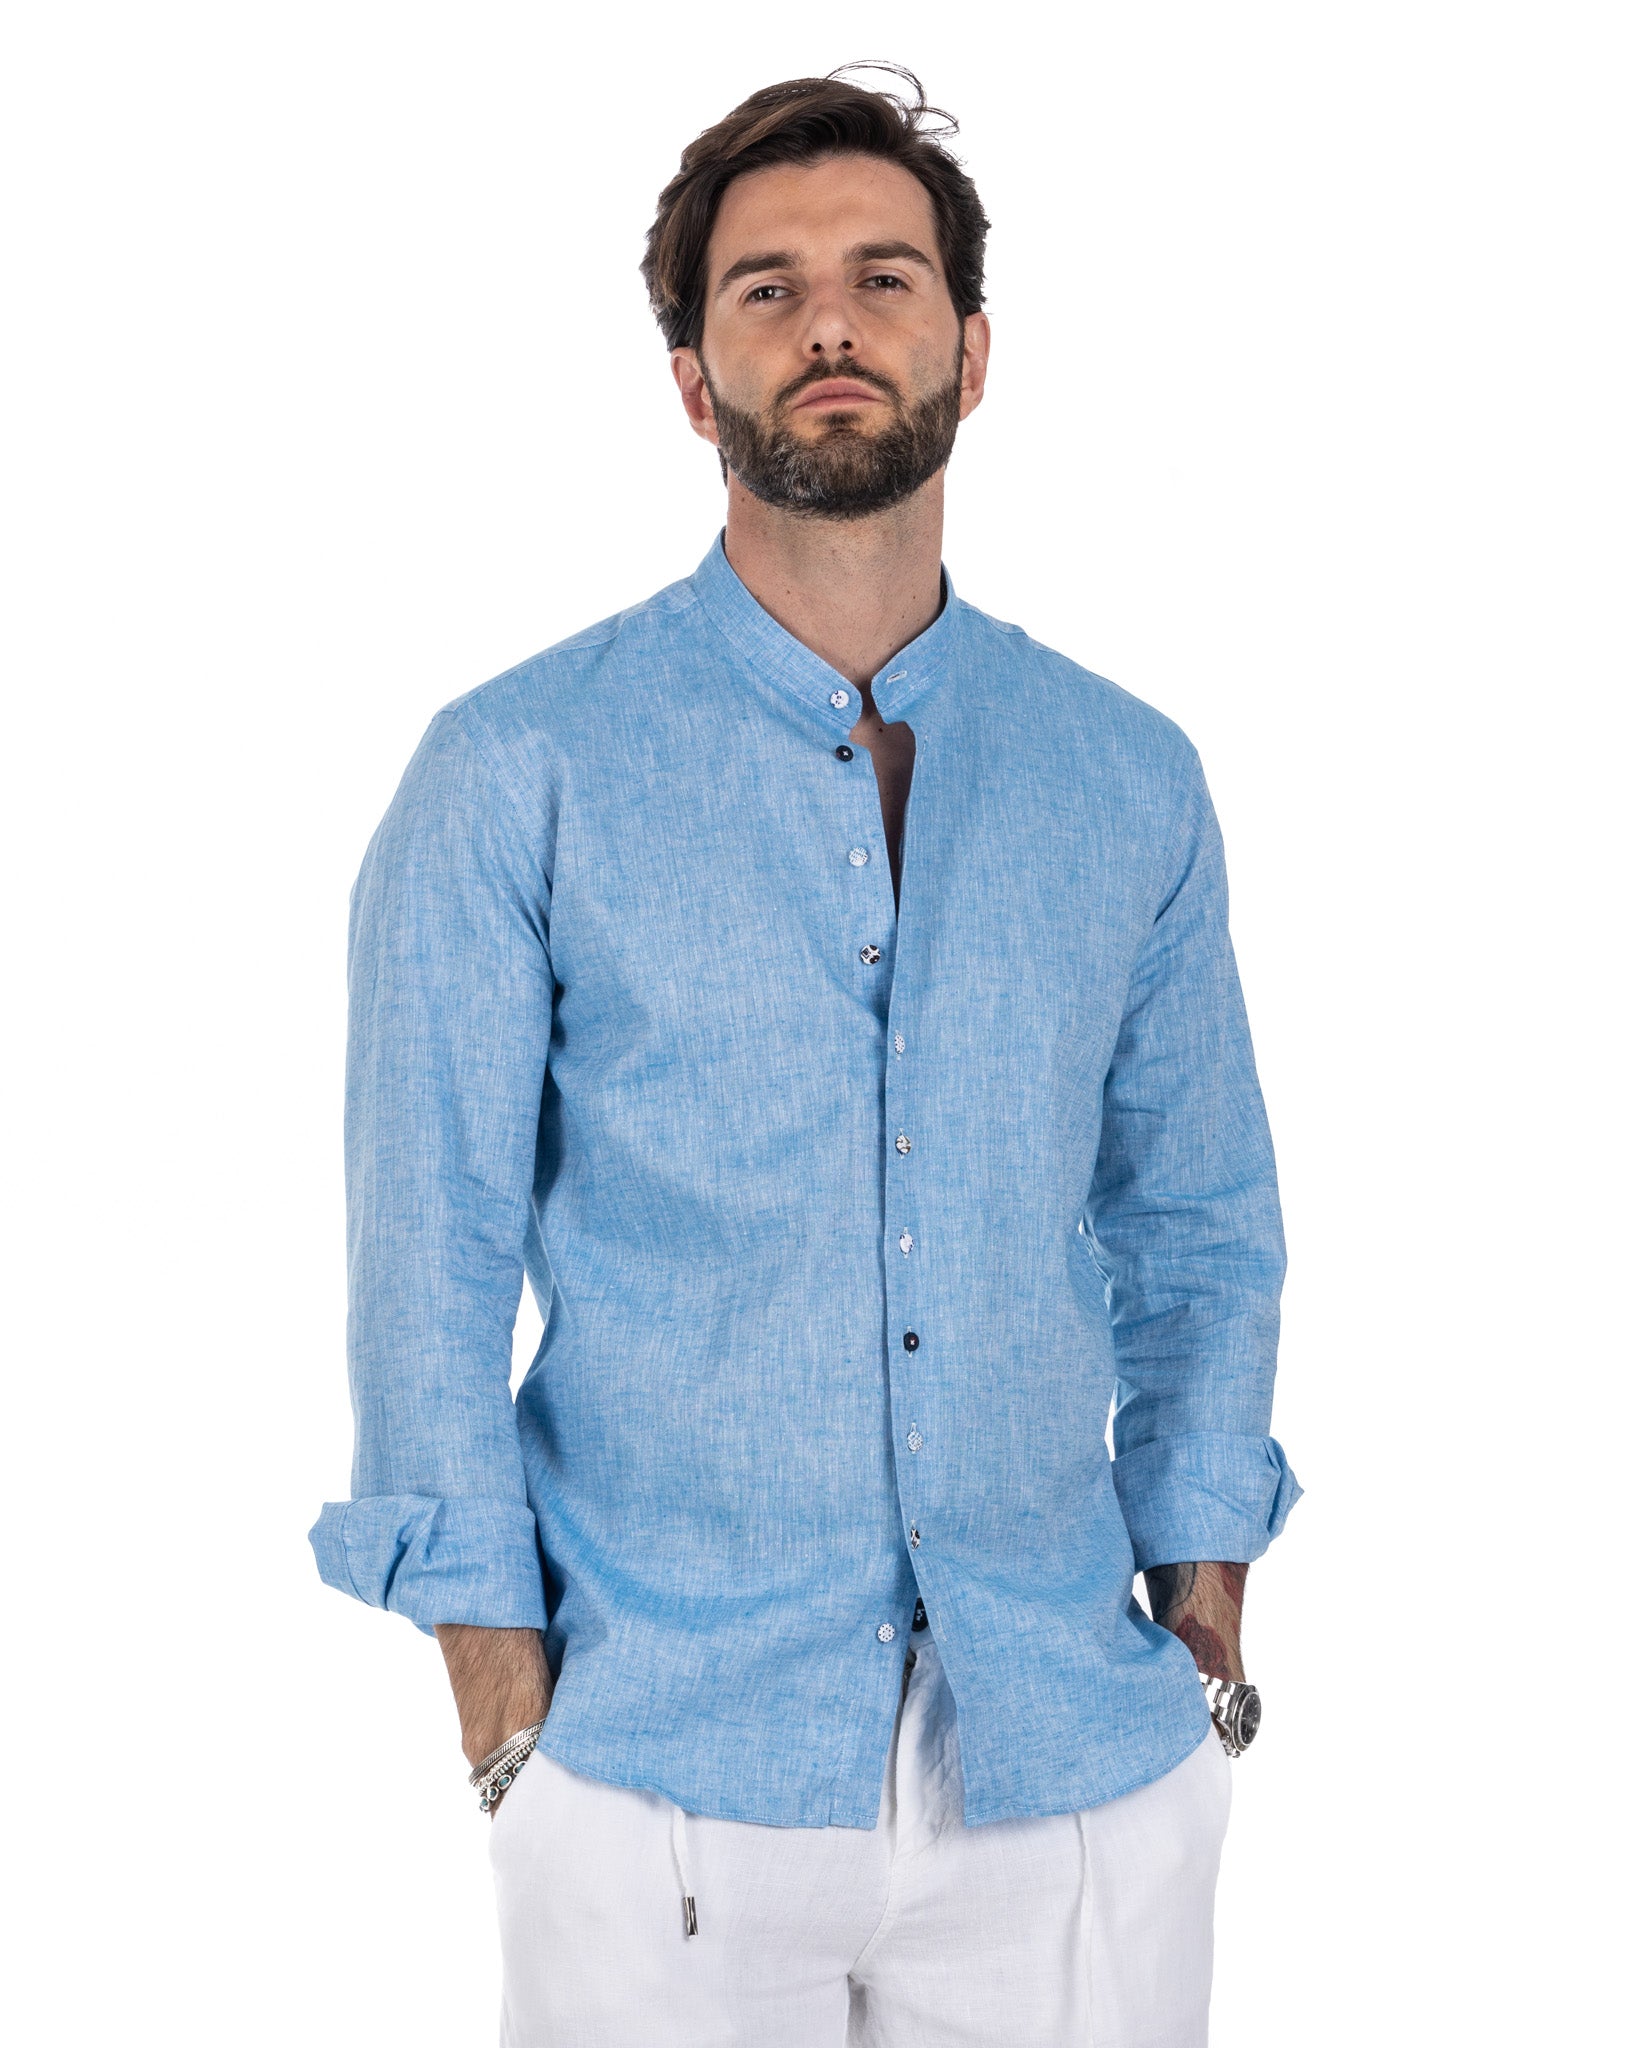 Positano - turquoise linen Korean shirt